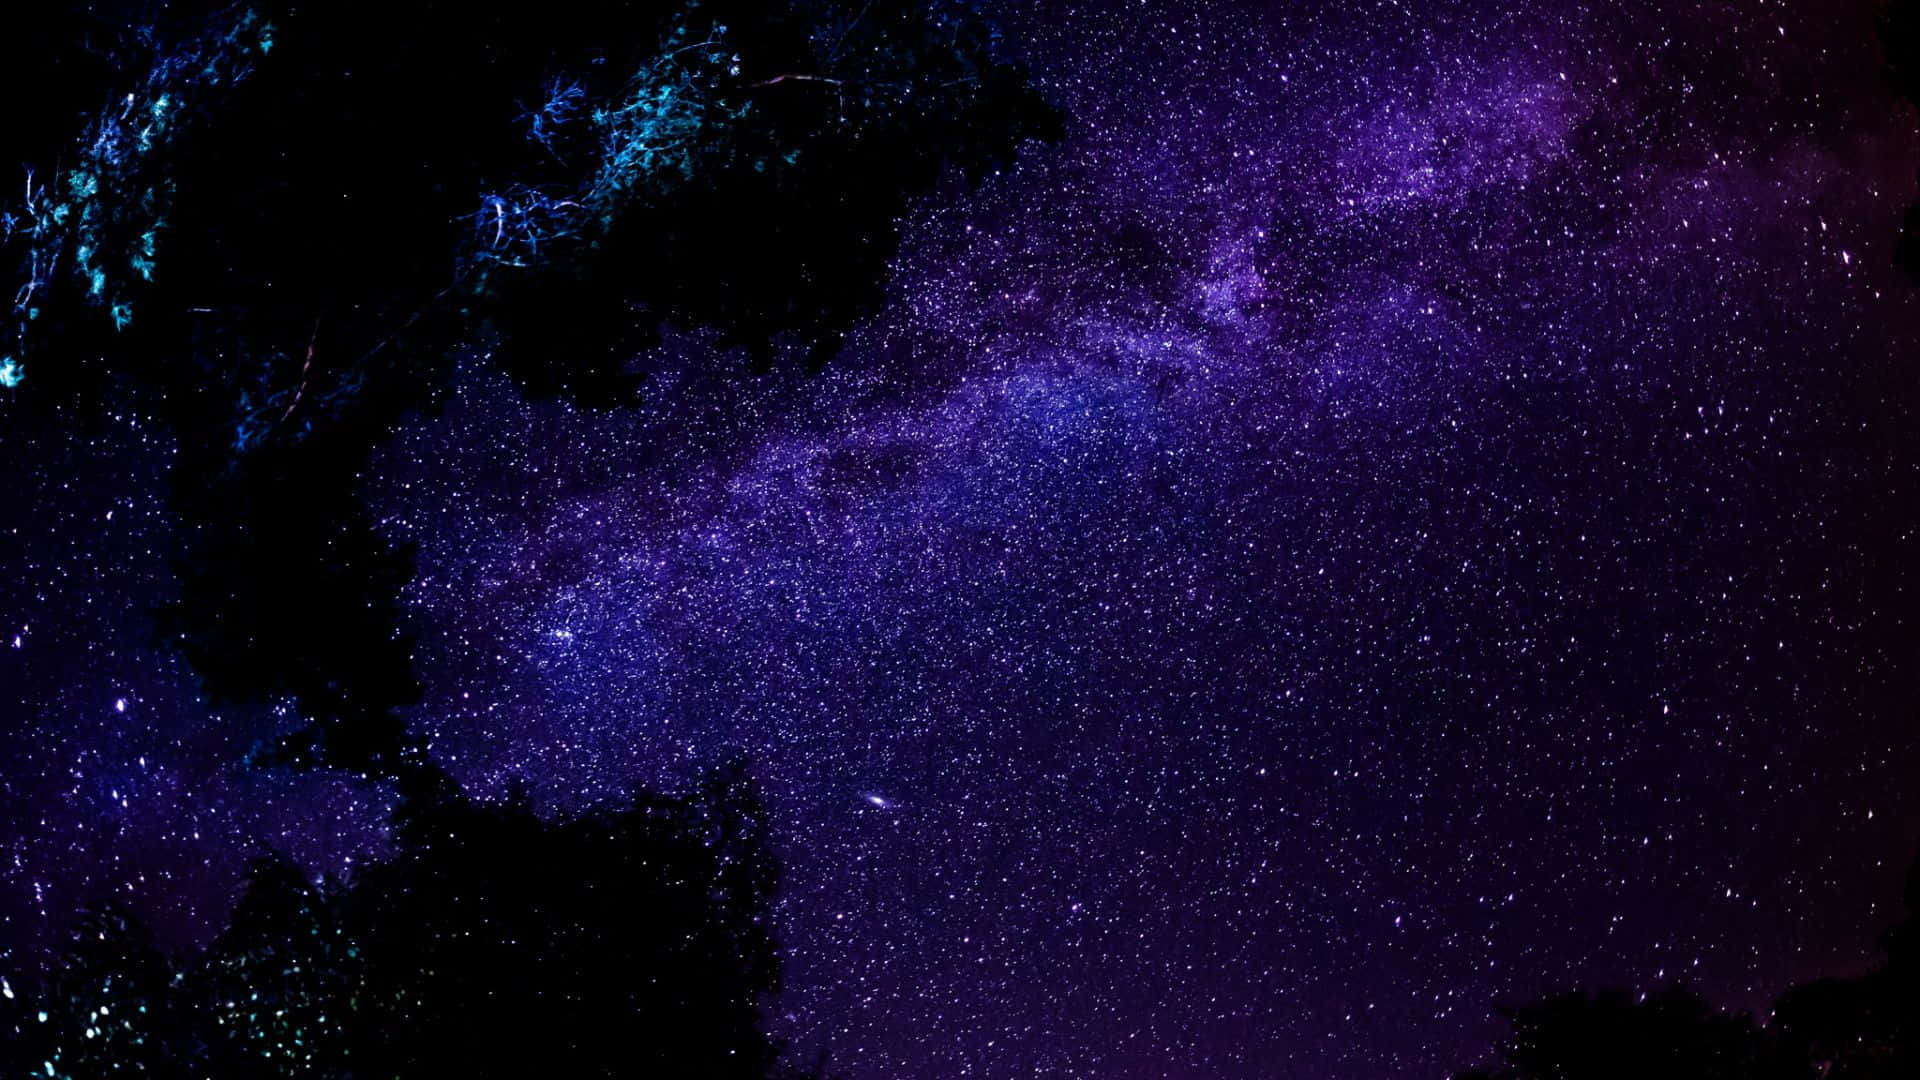 Imágenespúrpura Del Espacio Profundo